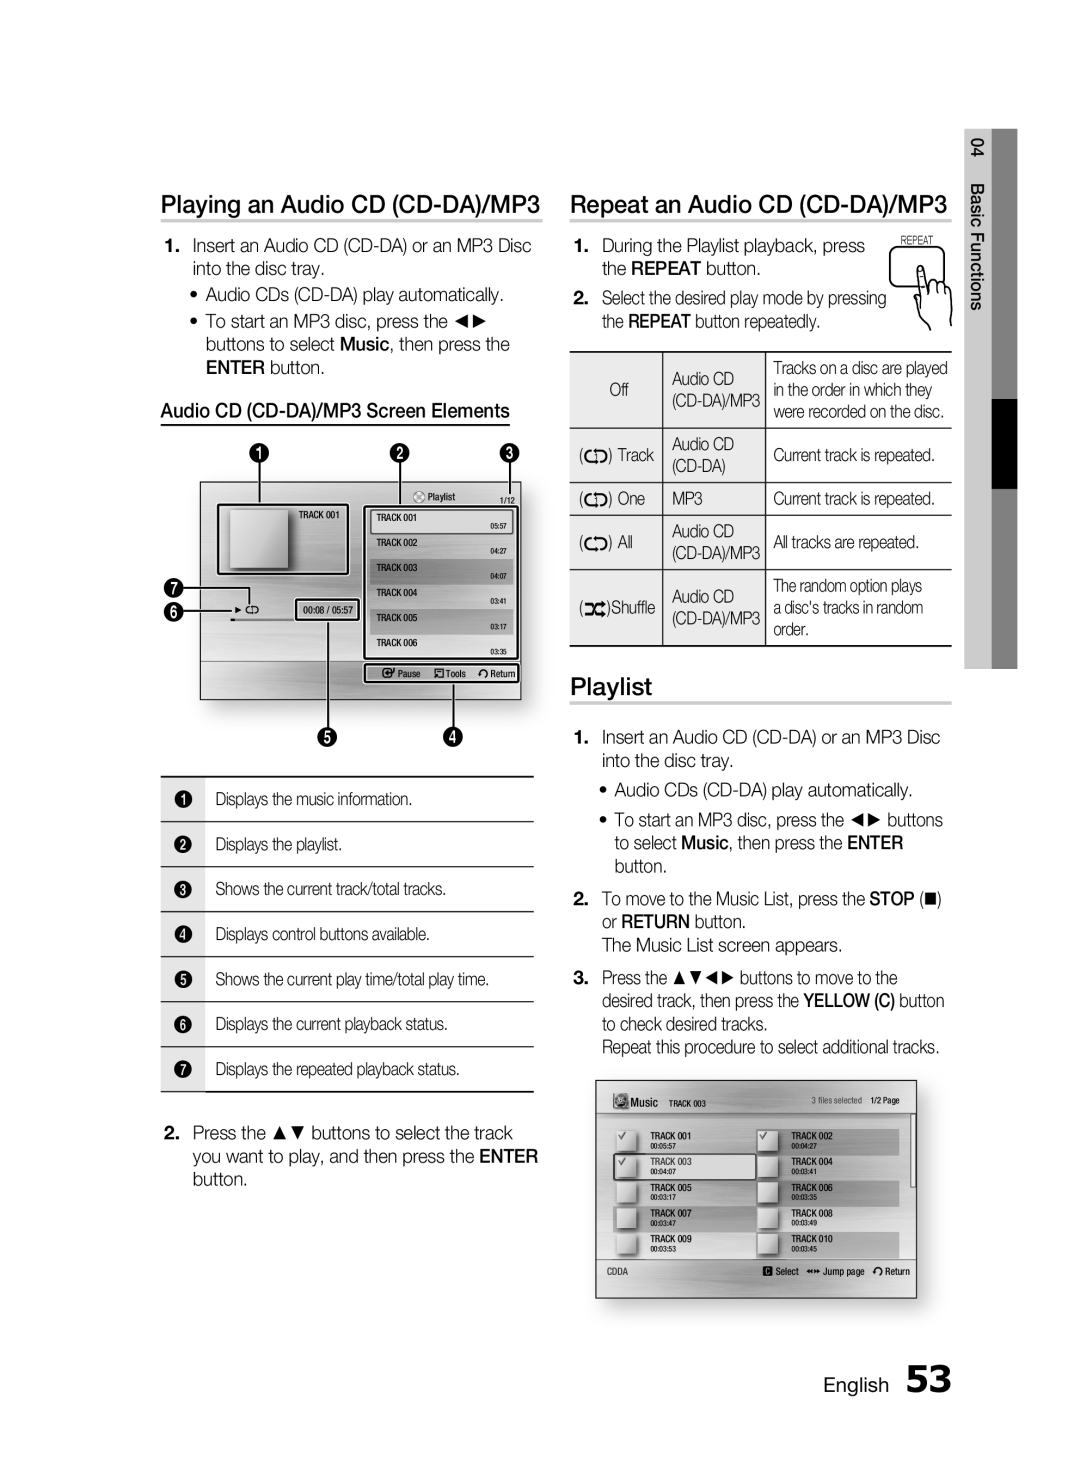 Samsung C6600 user manual Playlist, Audio CD CD-DA/MP3Screen Elements, English 